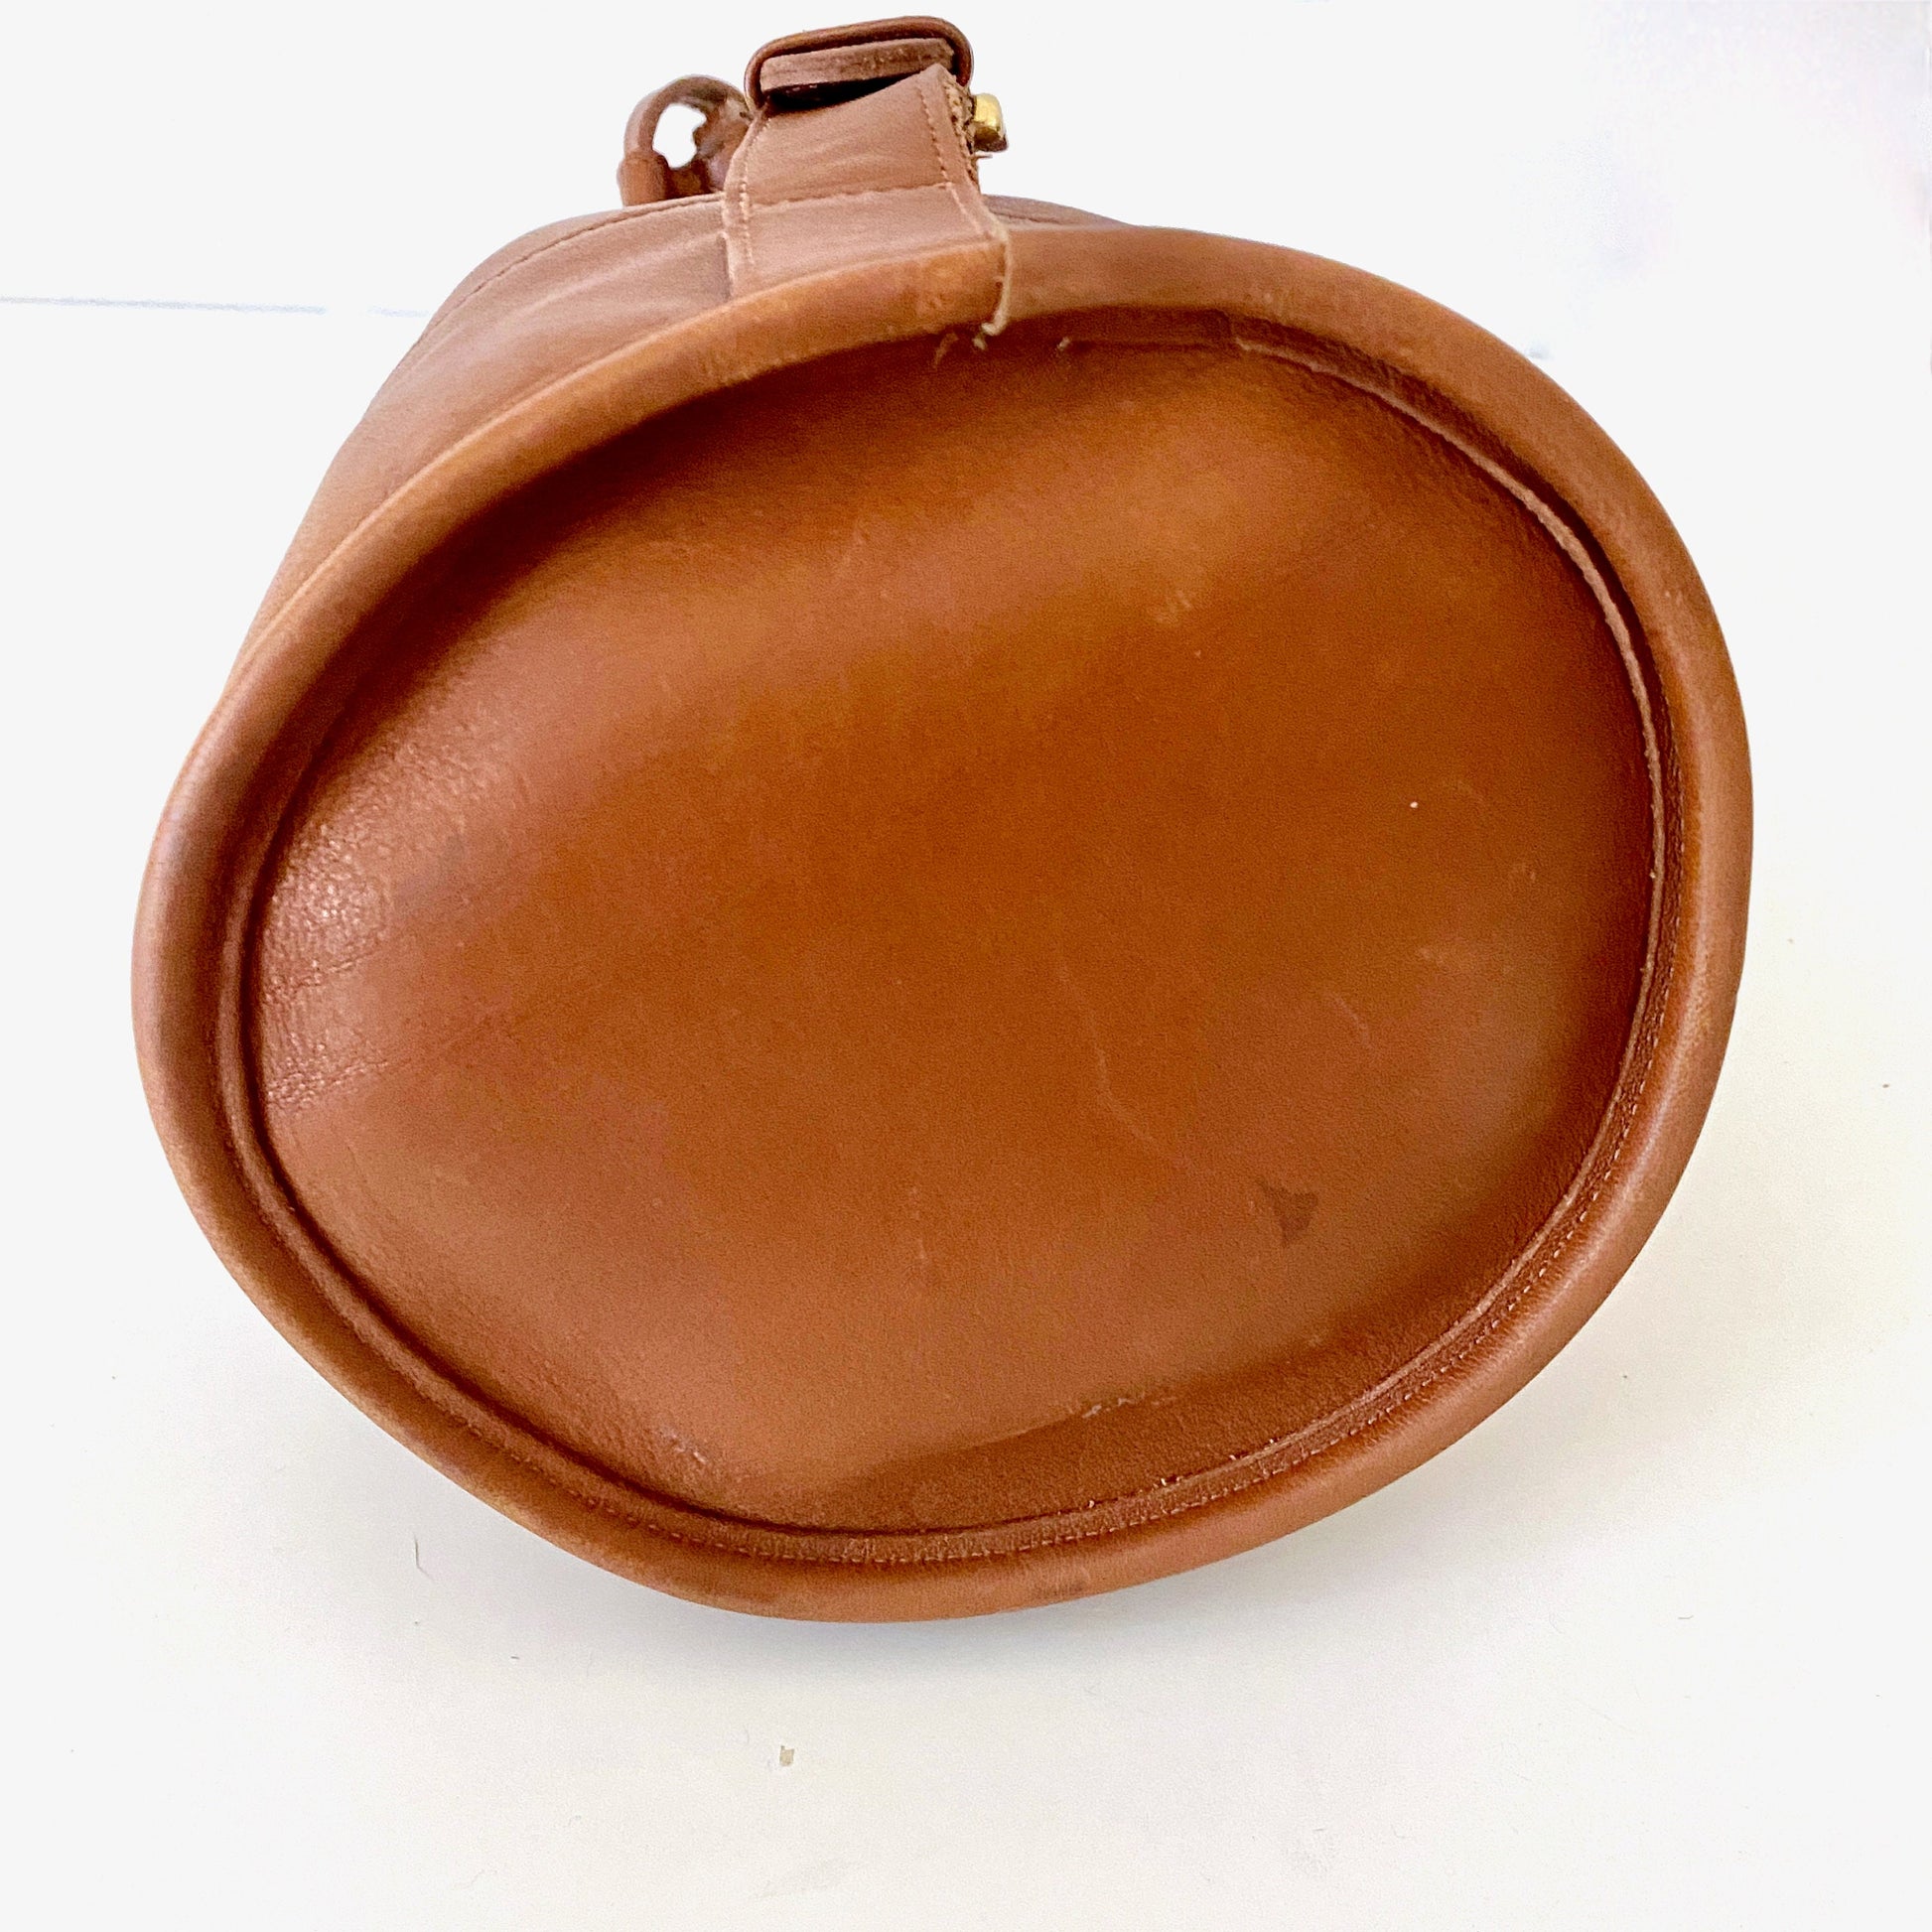 Vintage 1980s British tan crossbody COACH purse